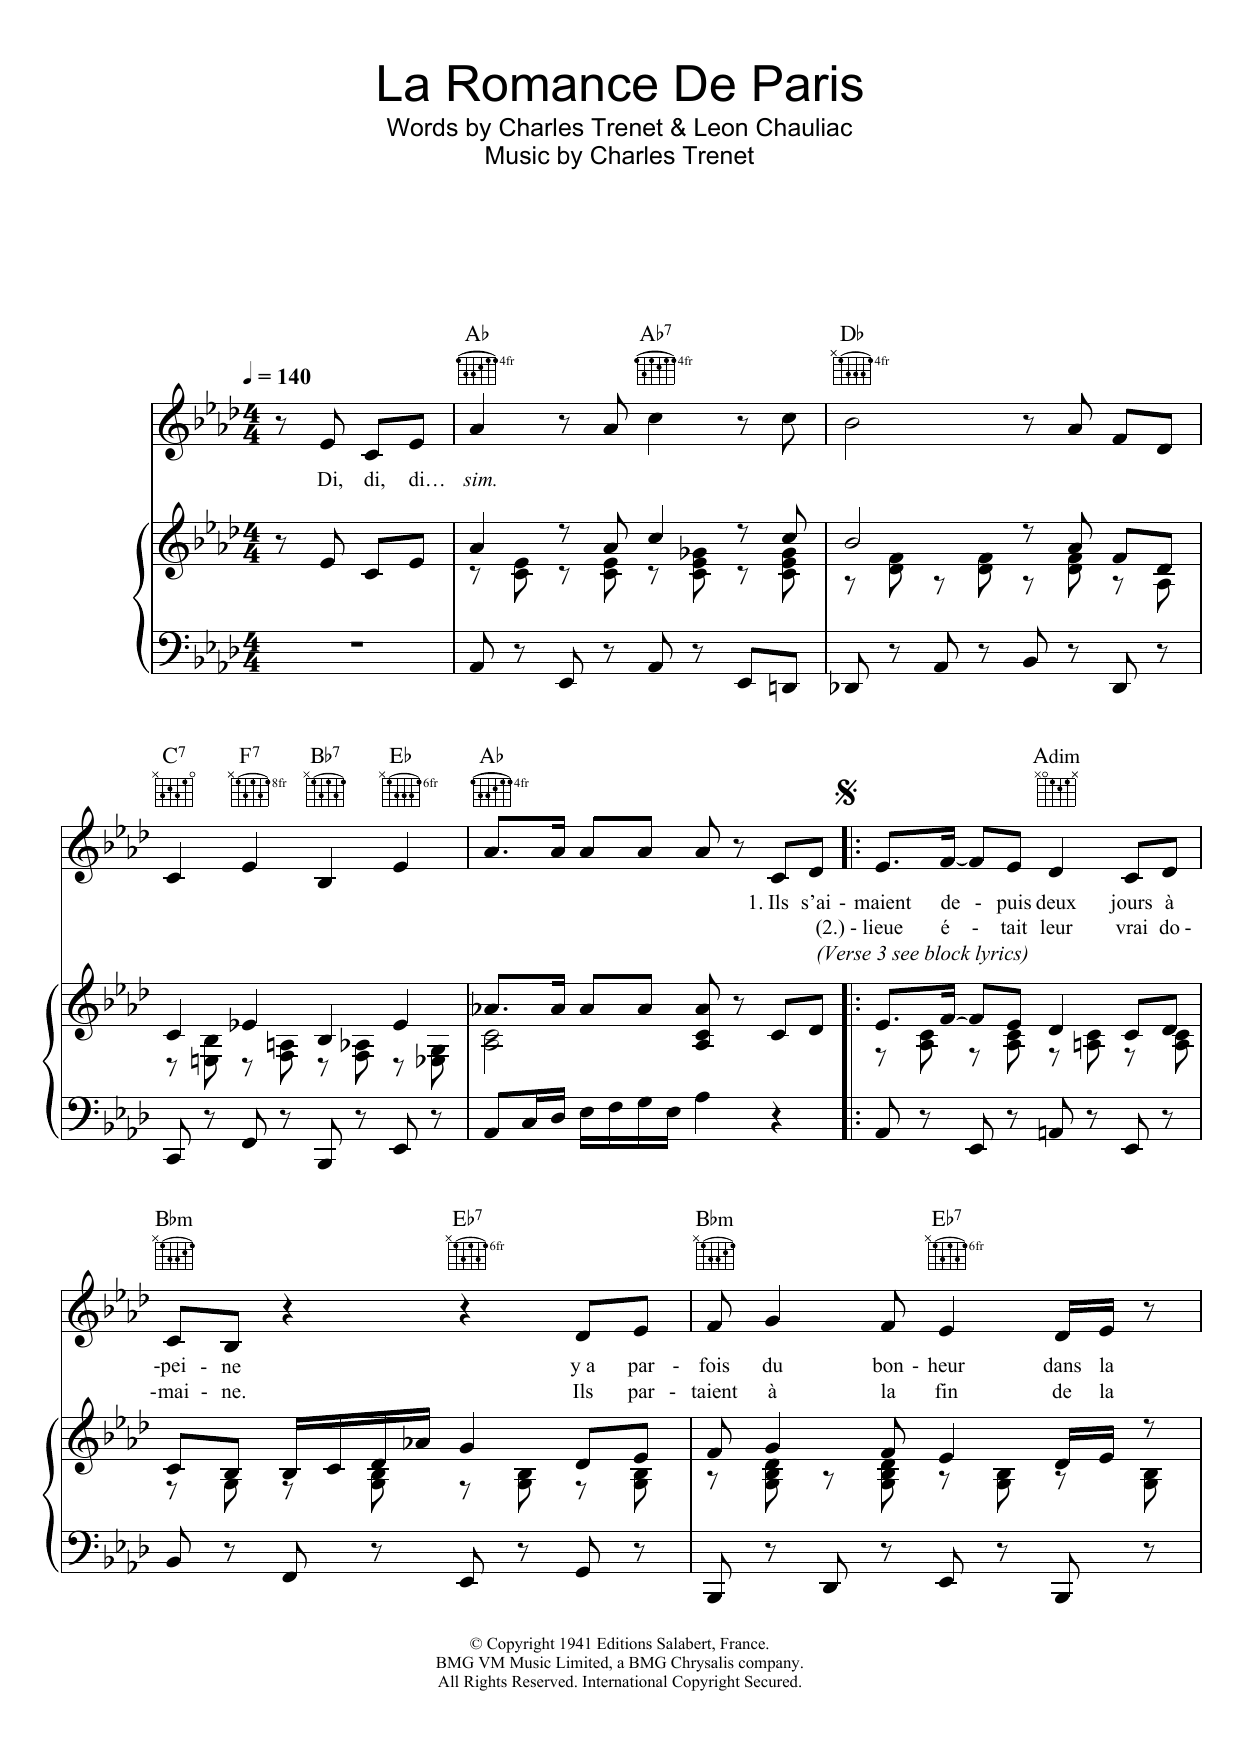 Zaz La Romance De Paris sheet music notes and chords arranged for Piano, Vocal & Guitar Chords